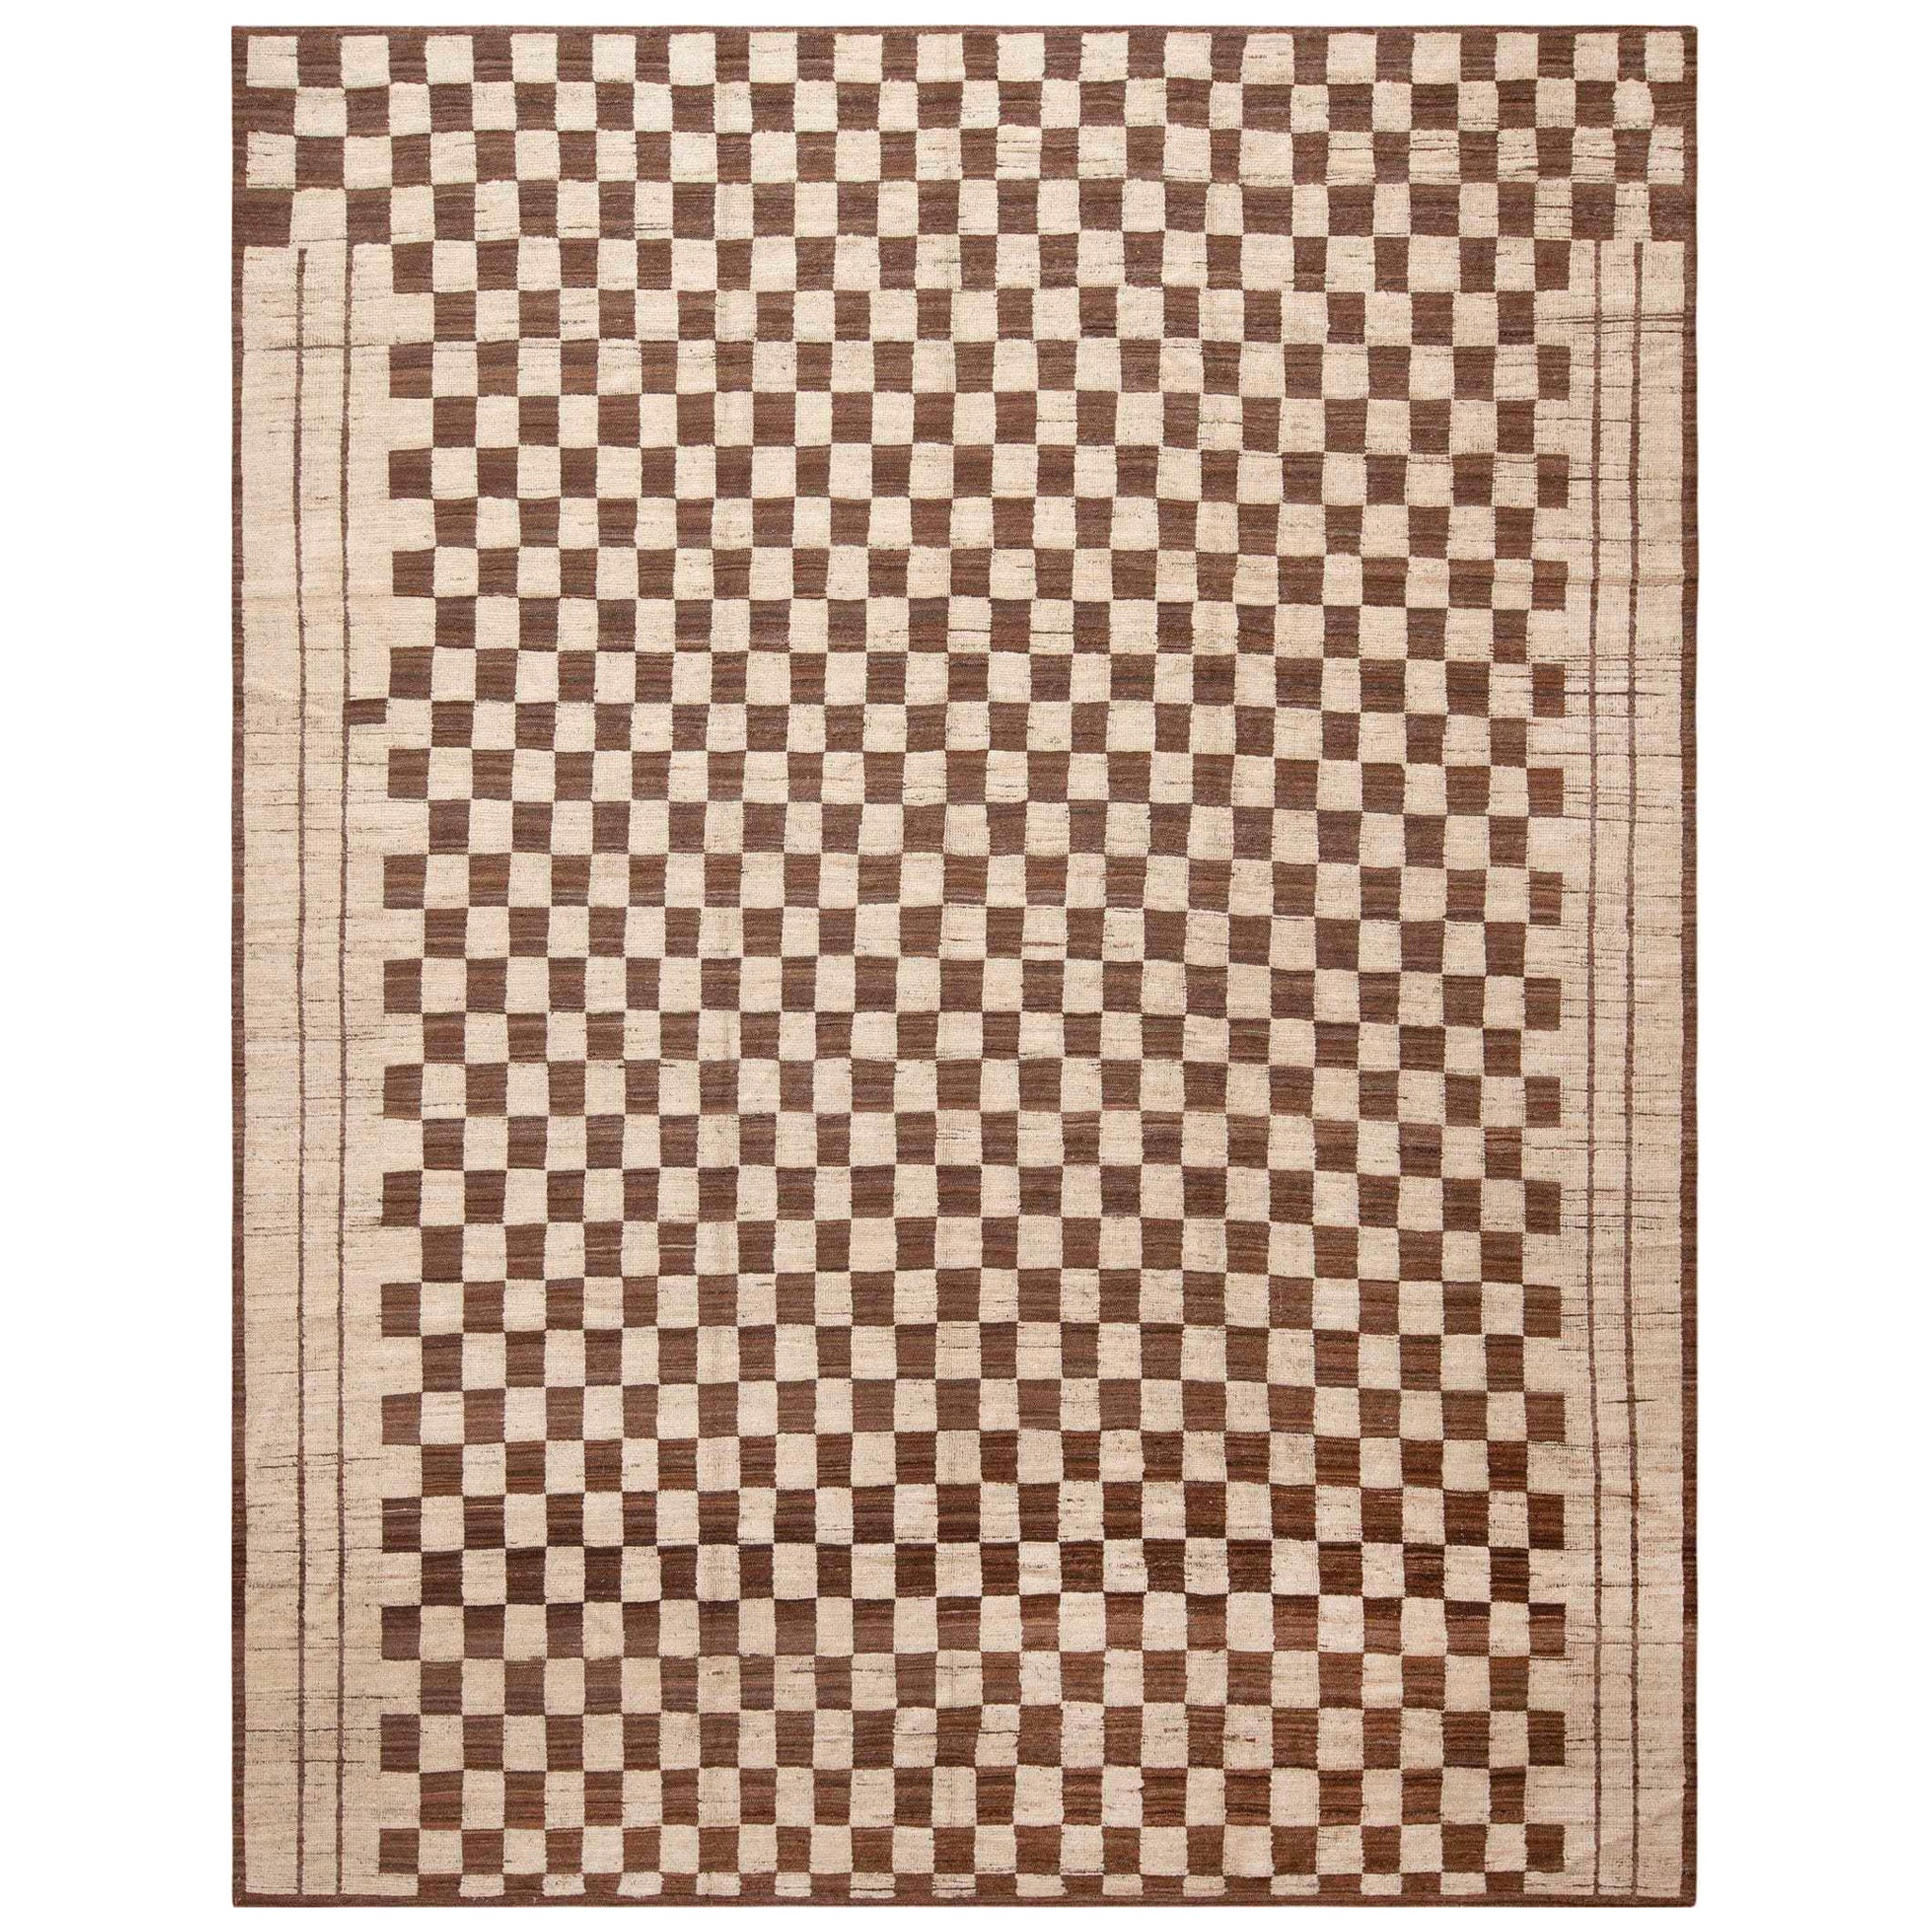 Nazmiyal Collection Modern Moroccan Checkerboard Design Area Rug 9'5" x 12'3"